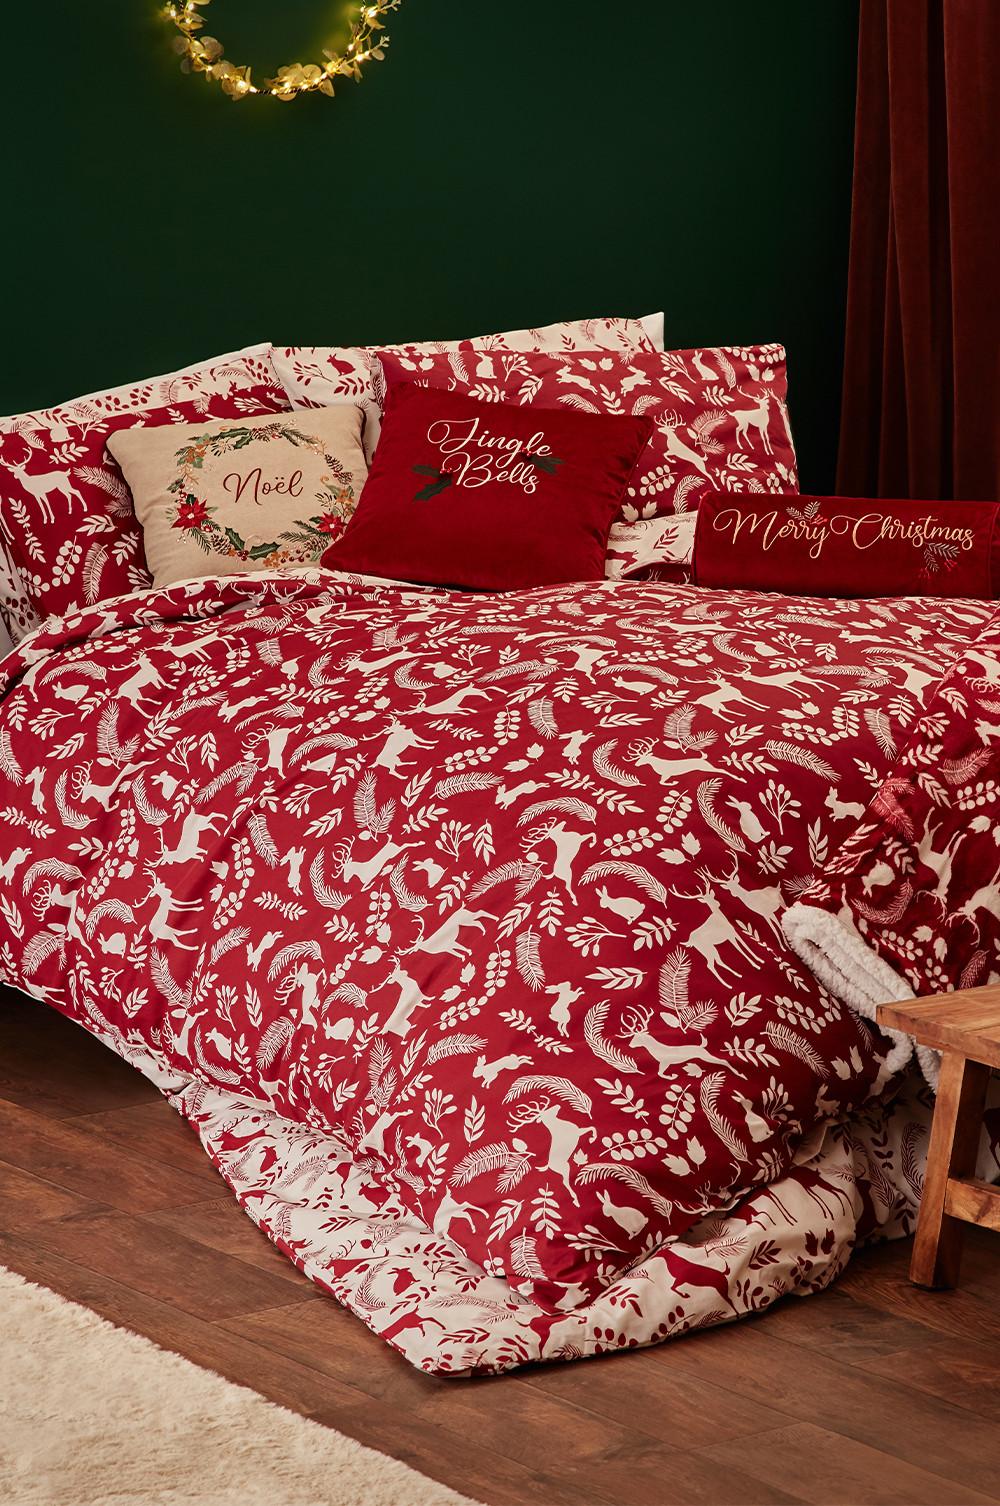 Christmas bedding and pillows